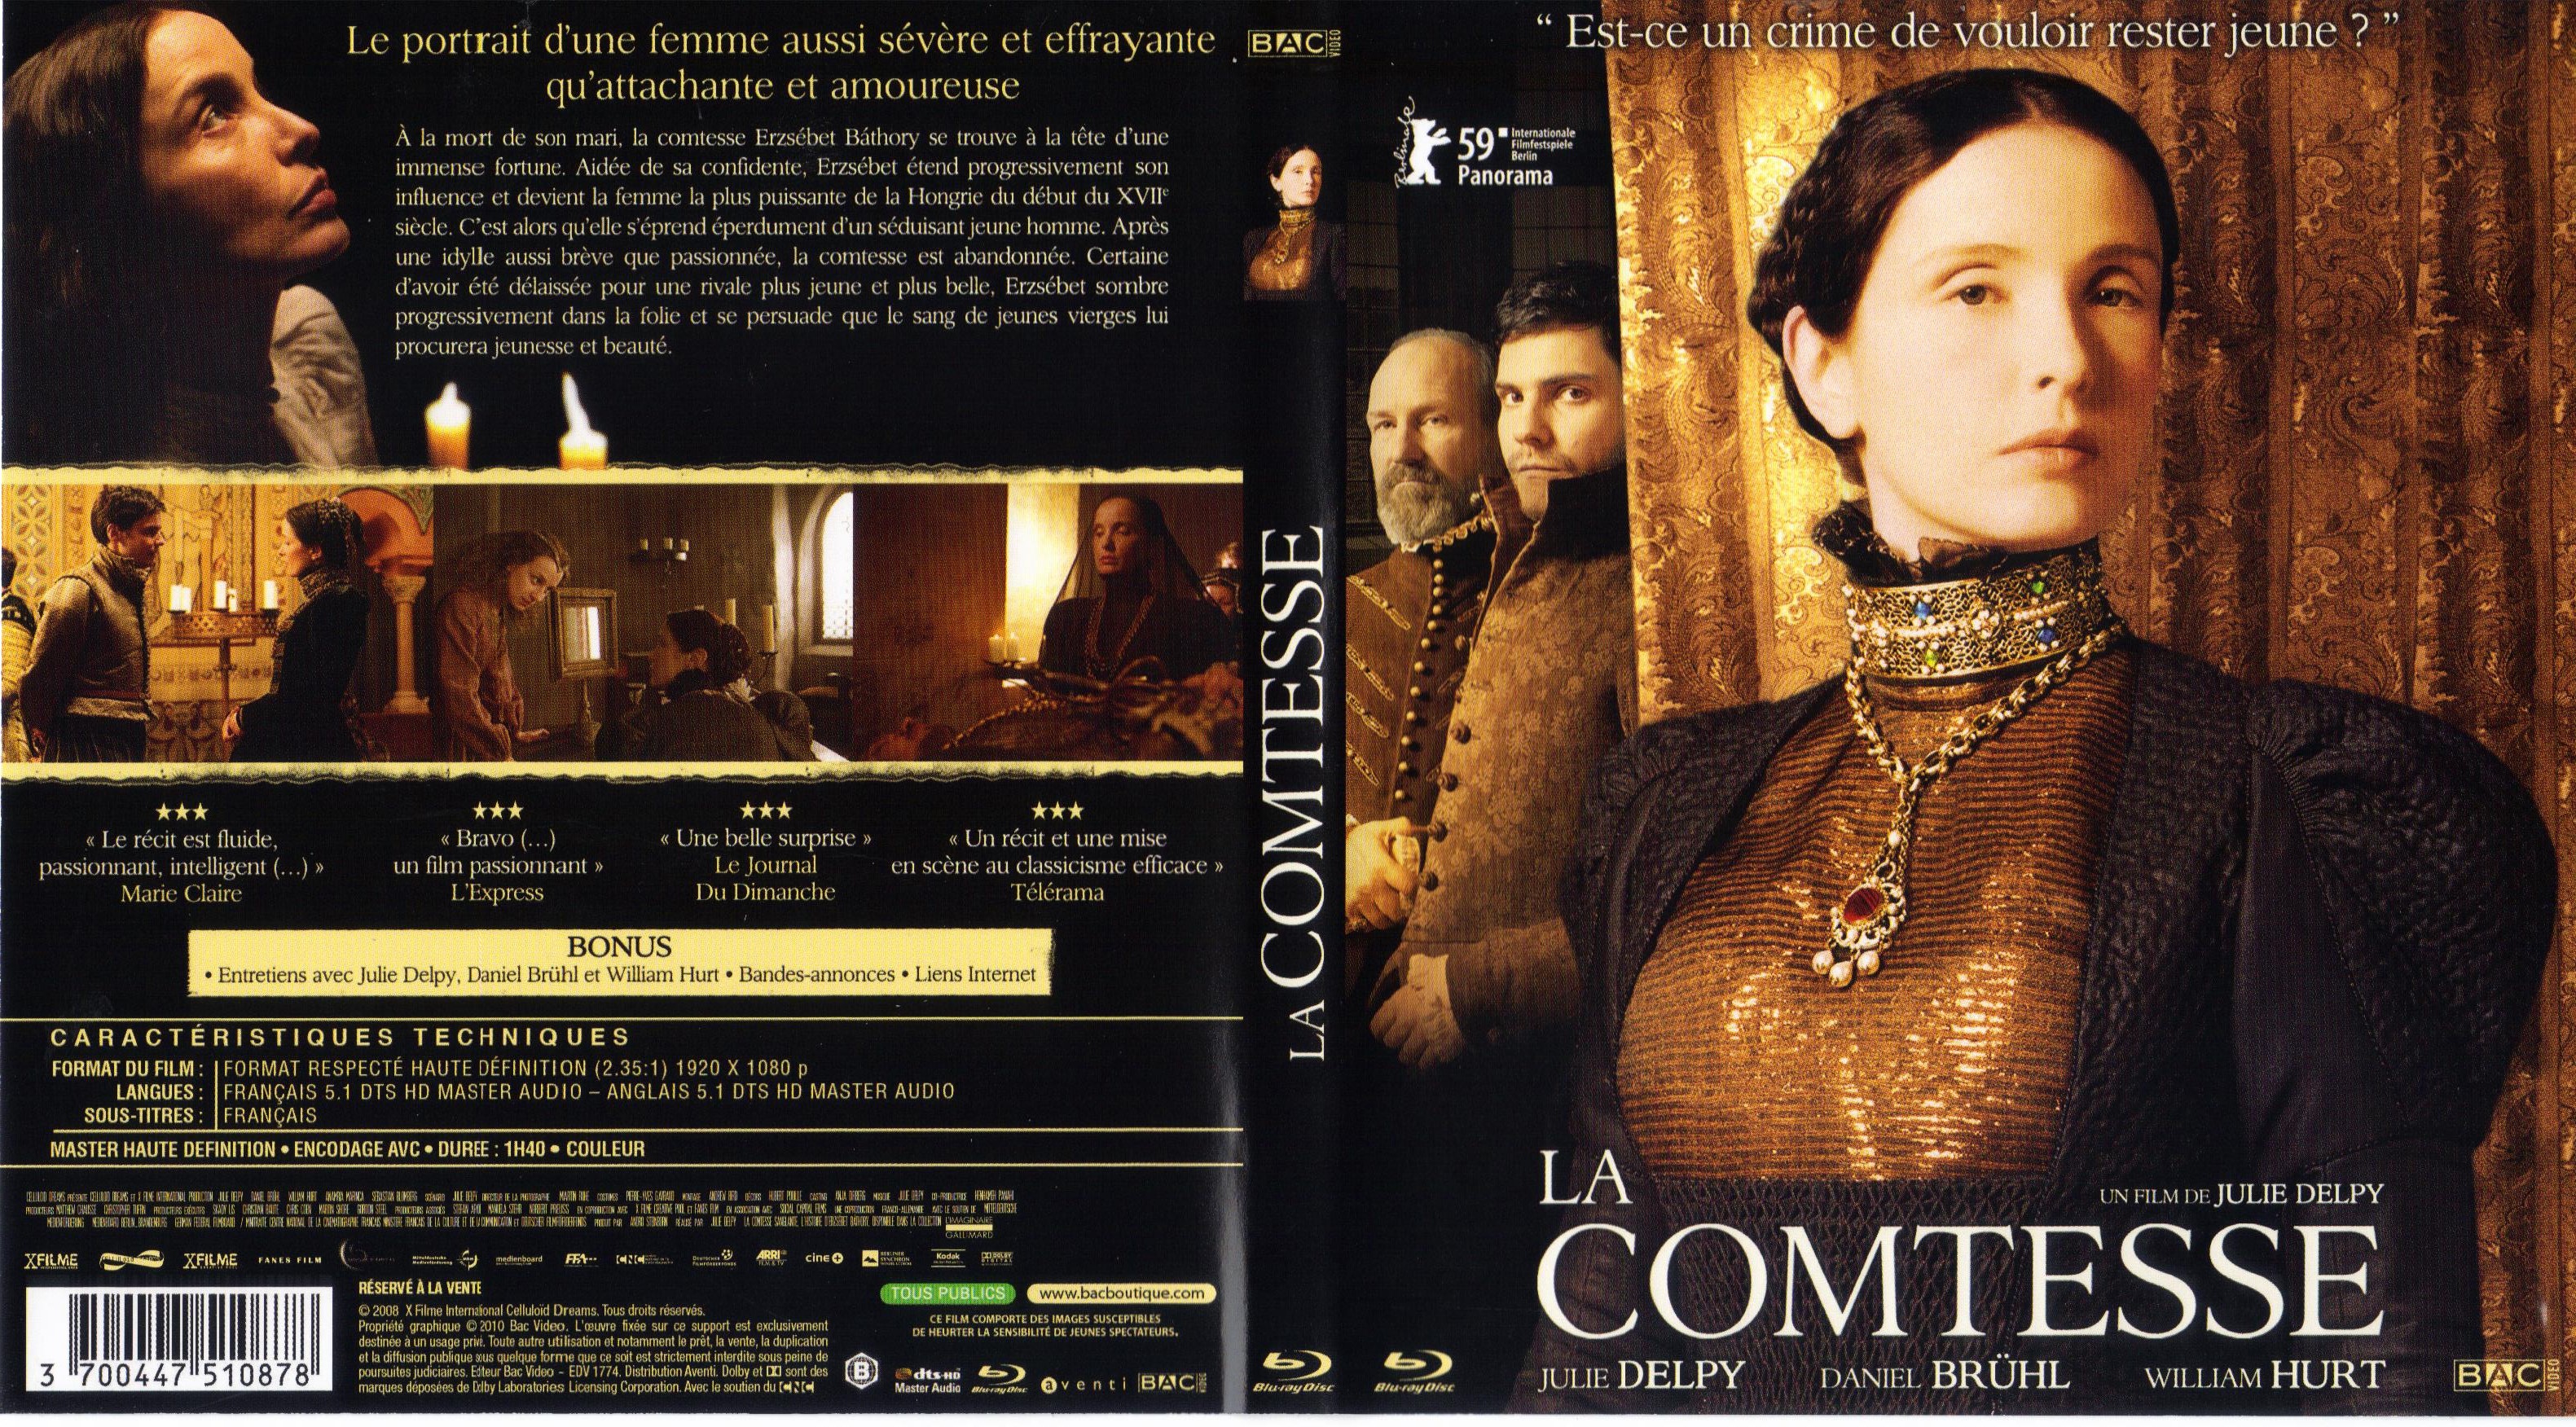 Jaquette DVD La comtesse (BLU-RAY)